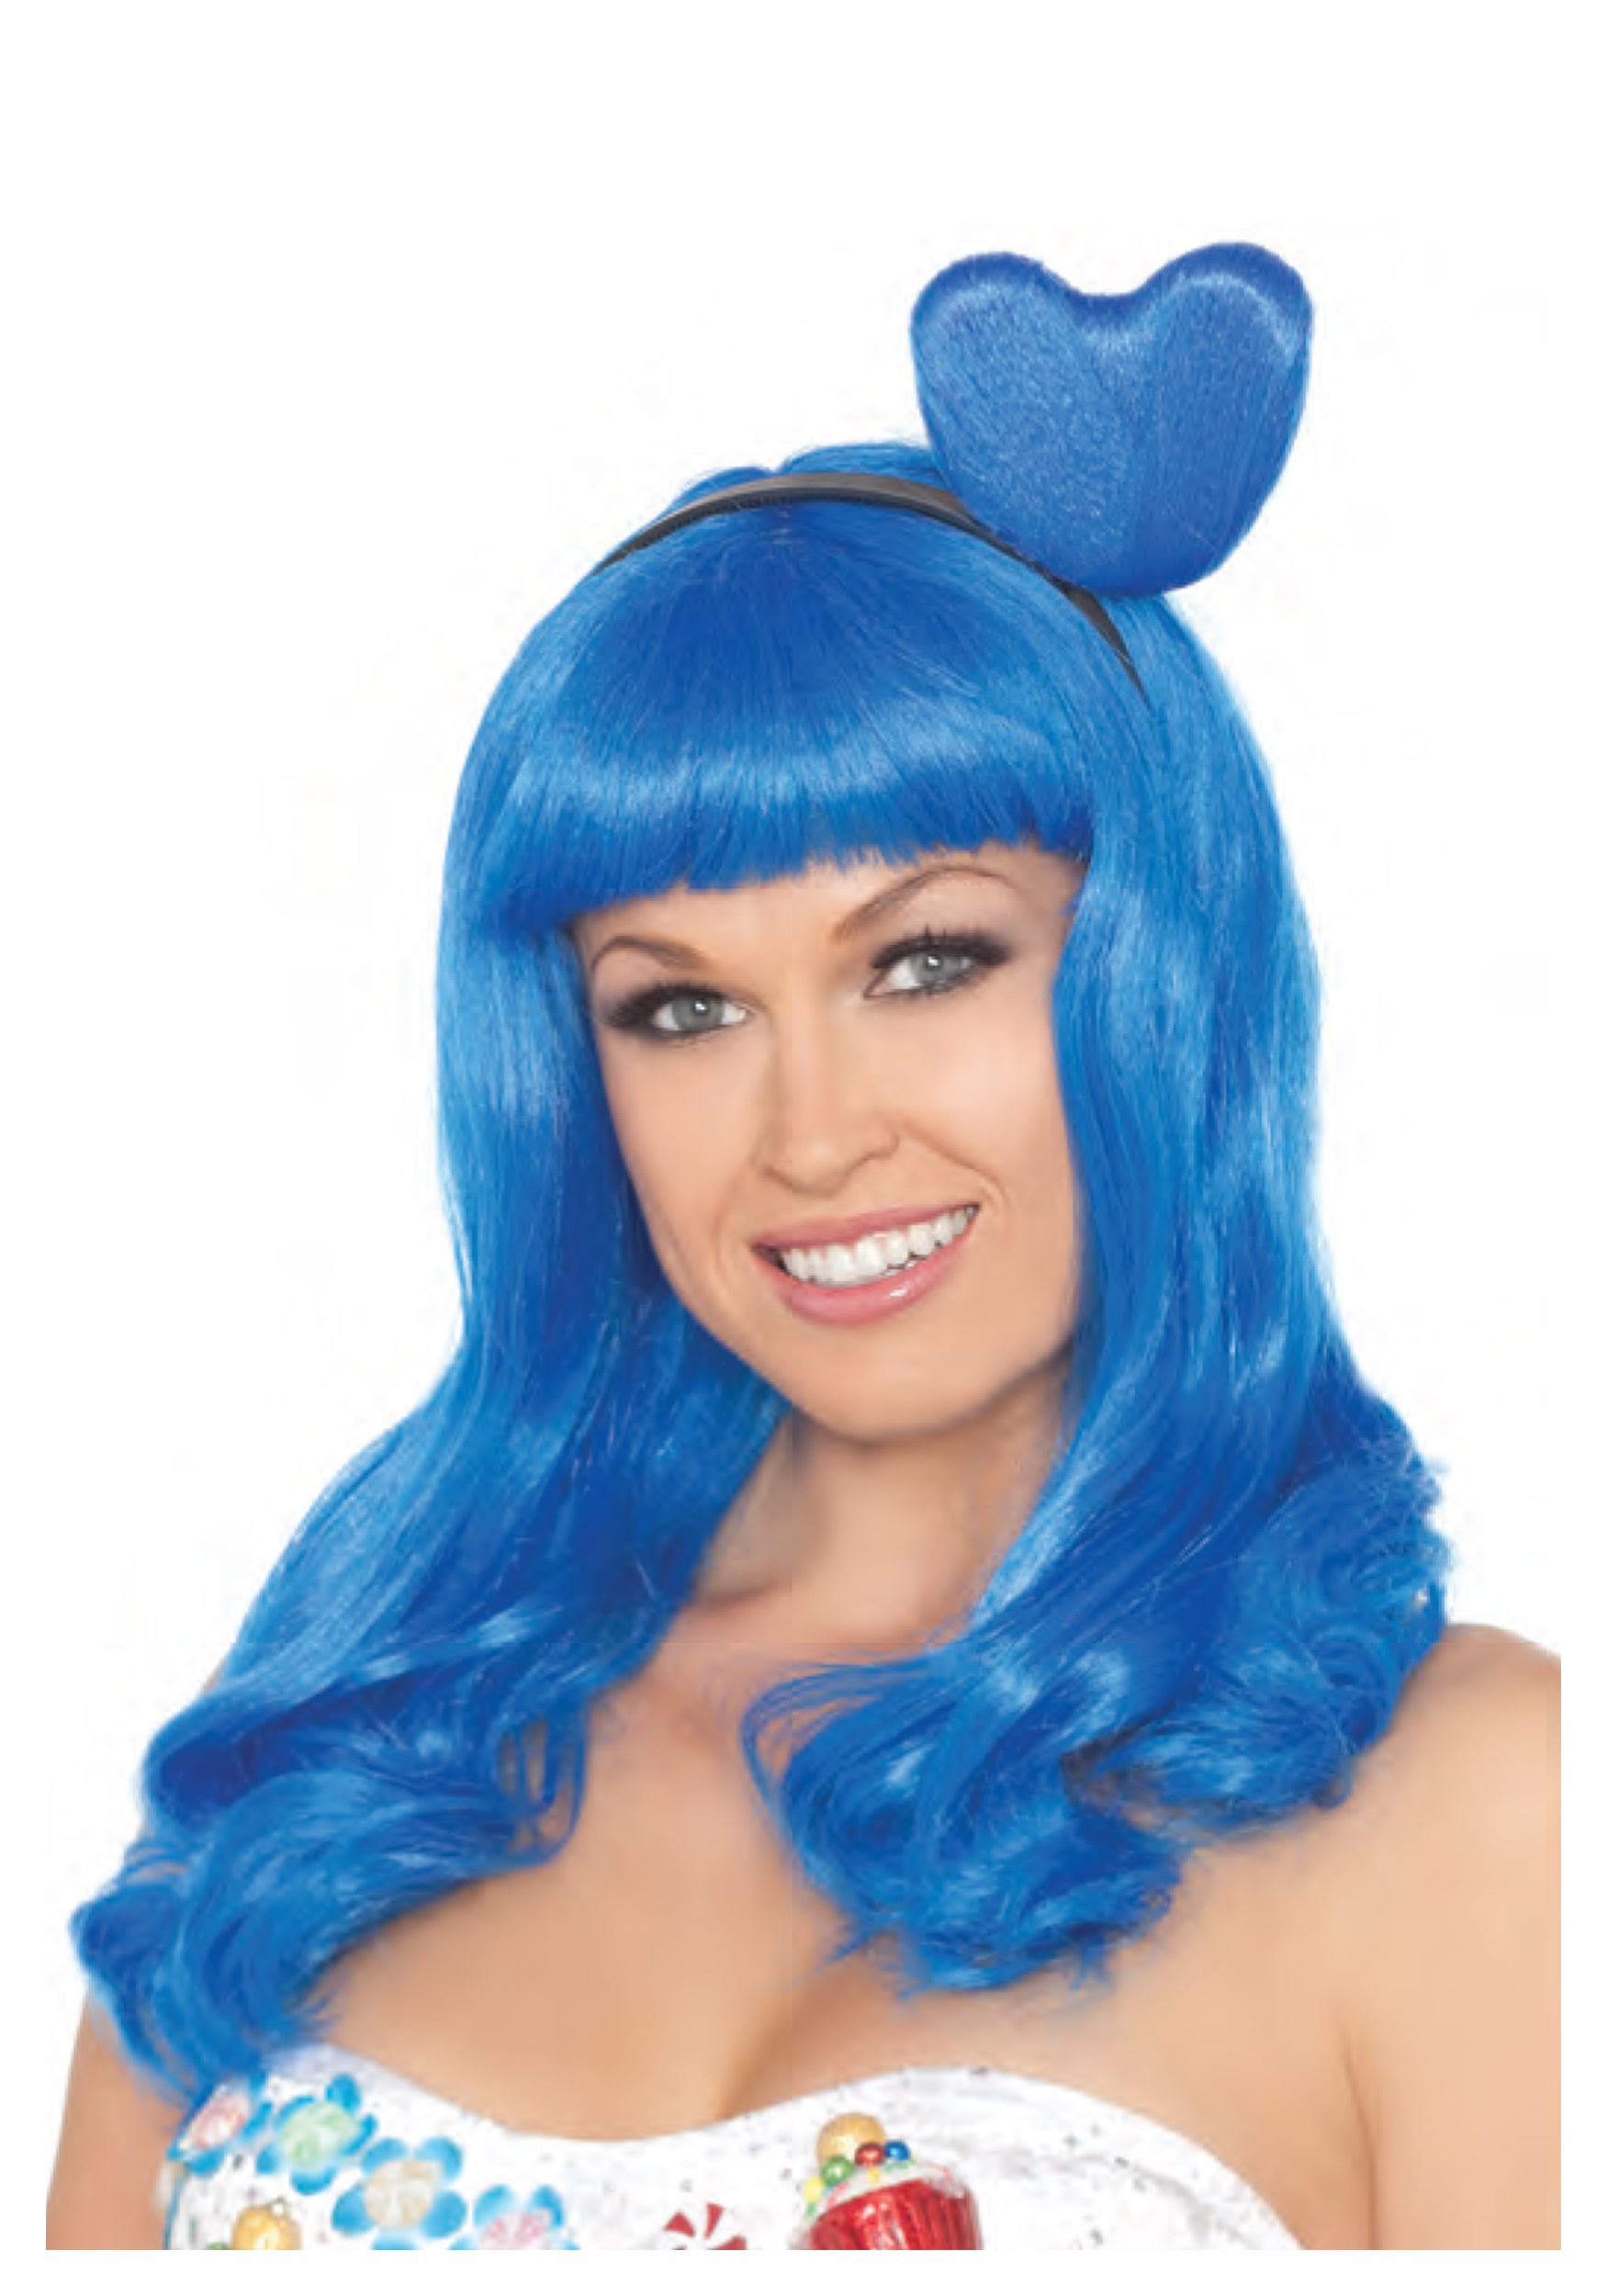 blue wig costume